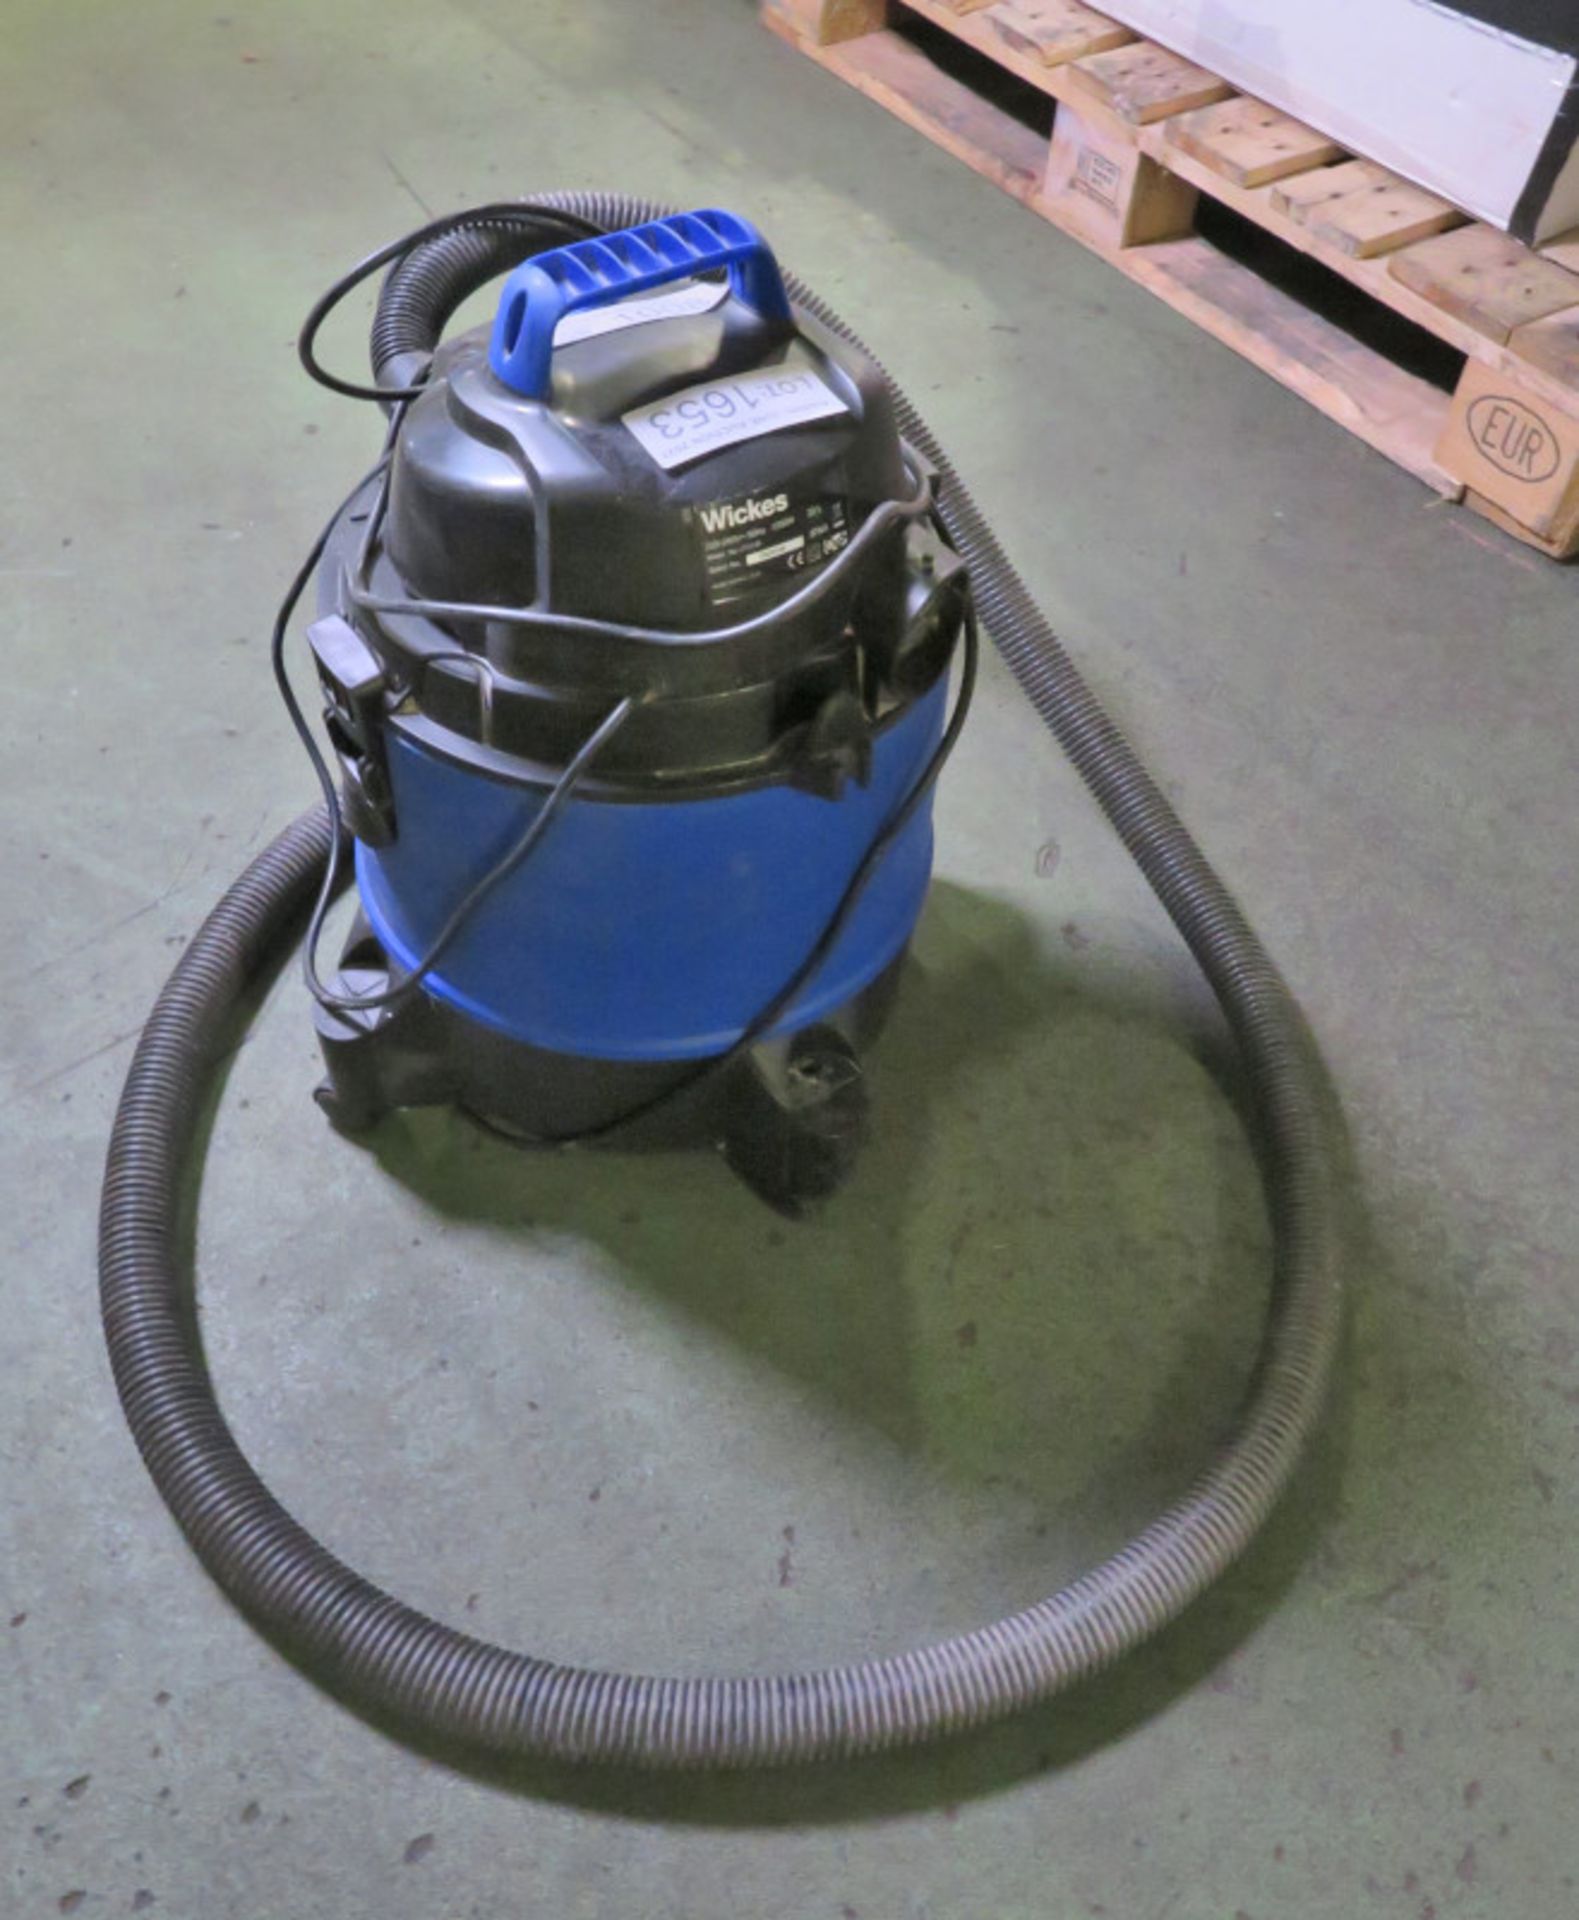 Wickes 20L 1250W model 215735 vacuum cleaner - Image 2 of 4